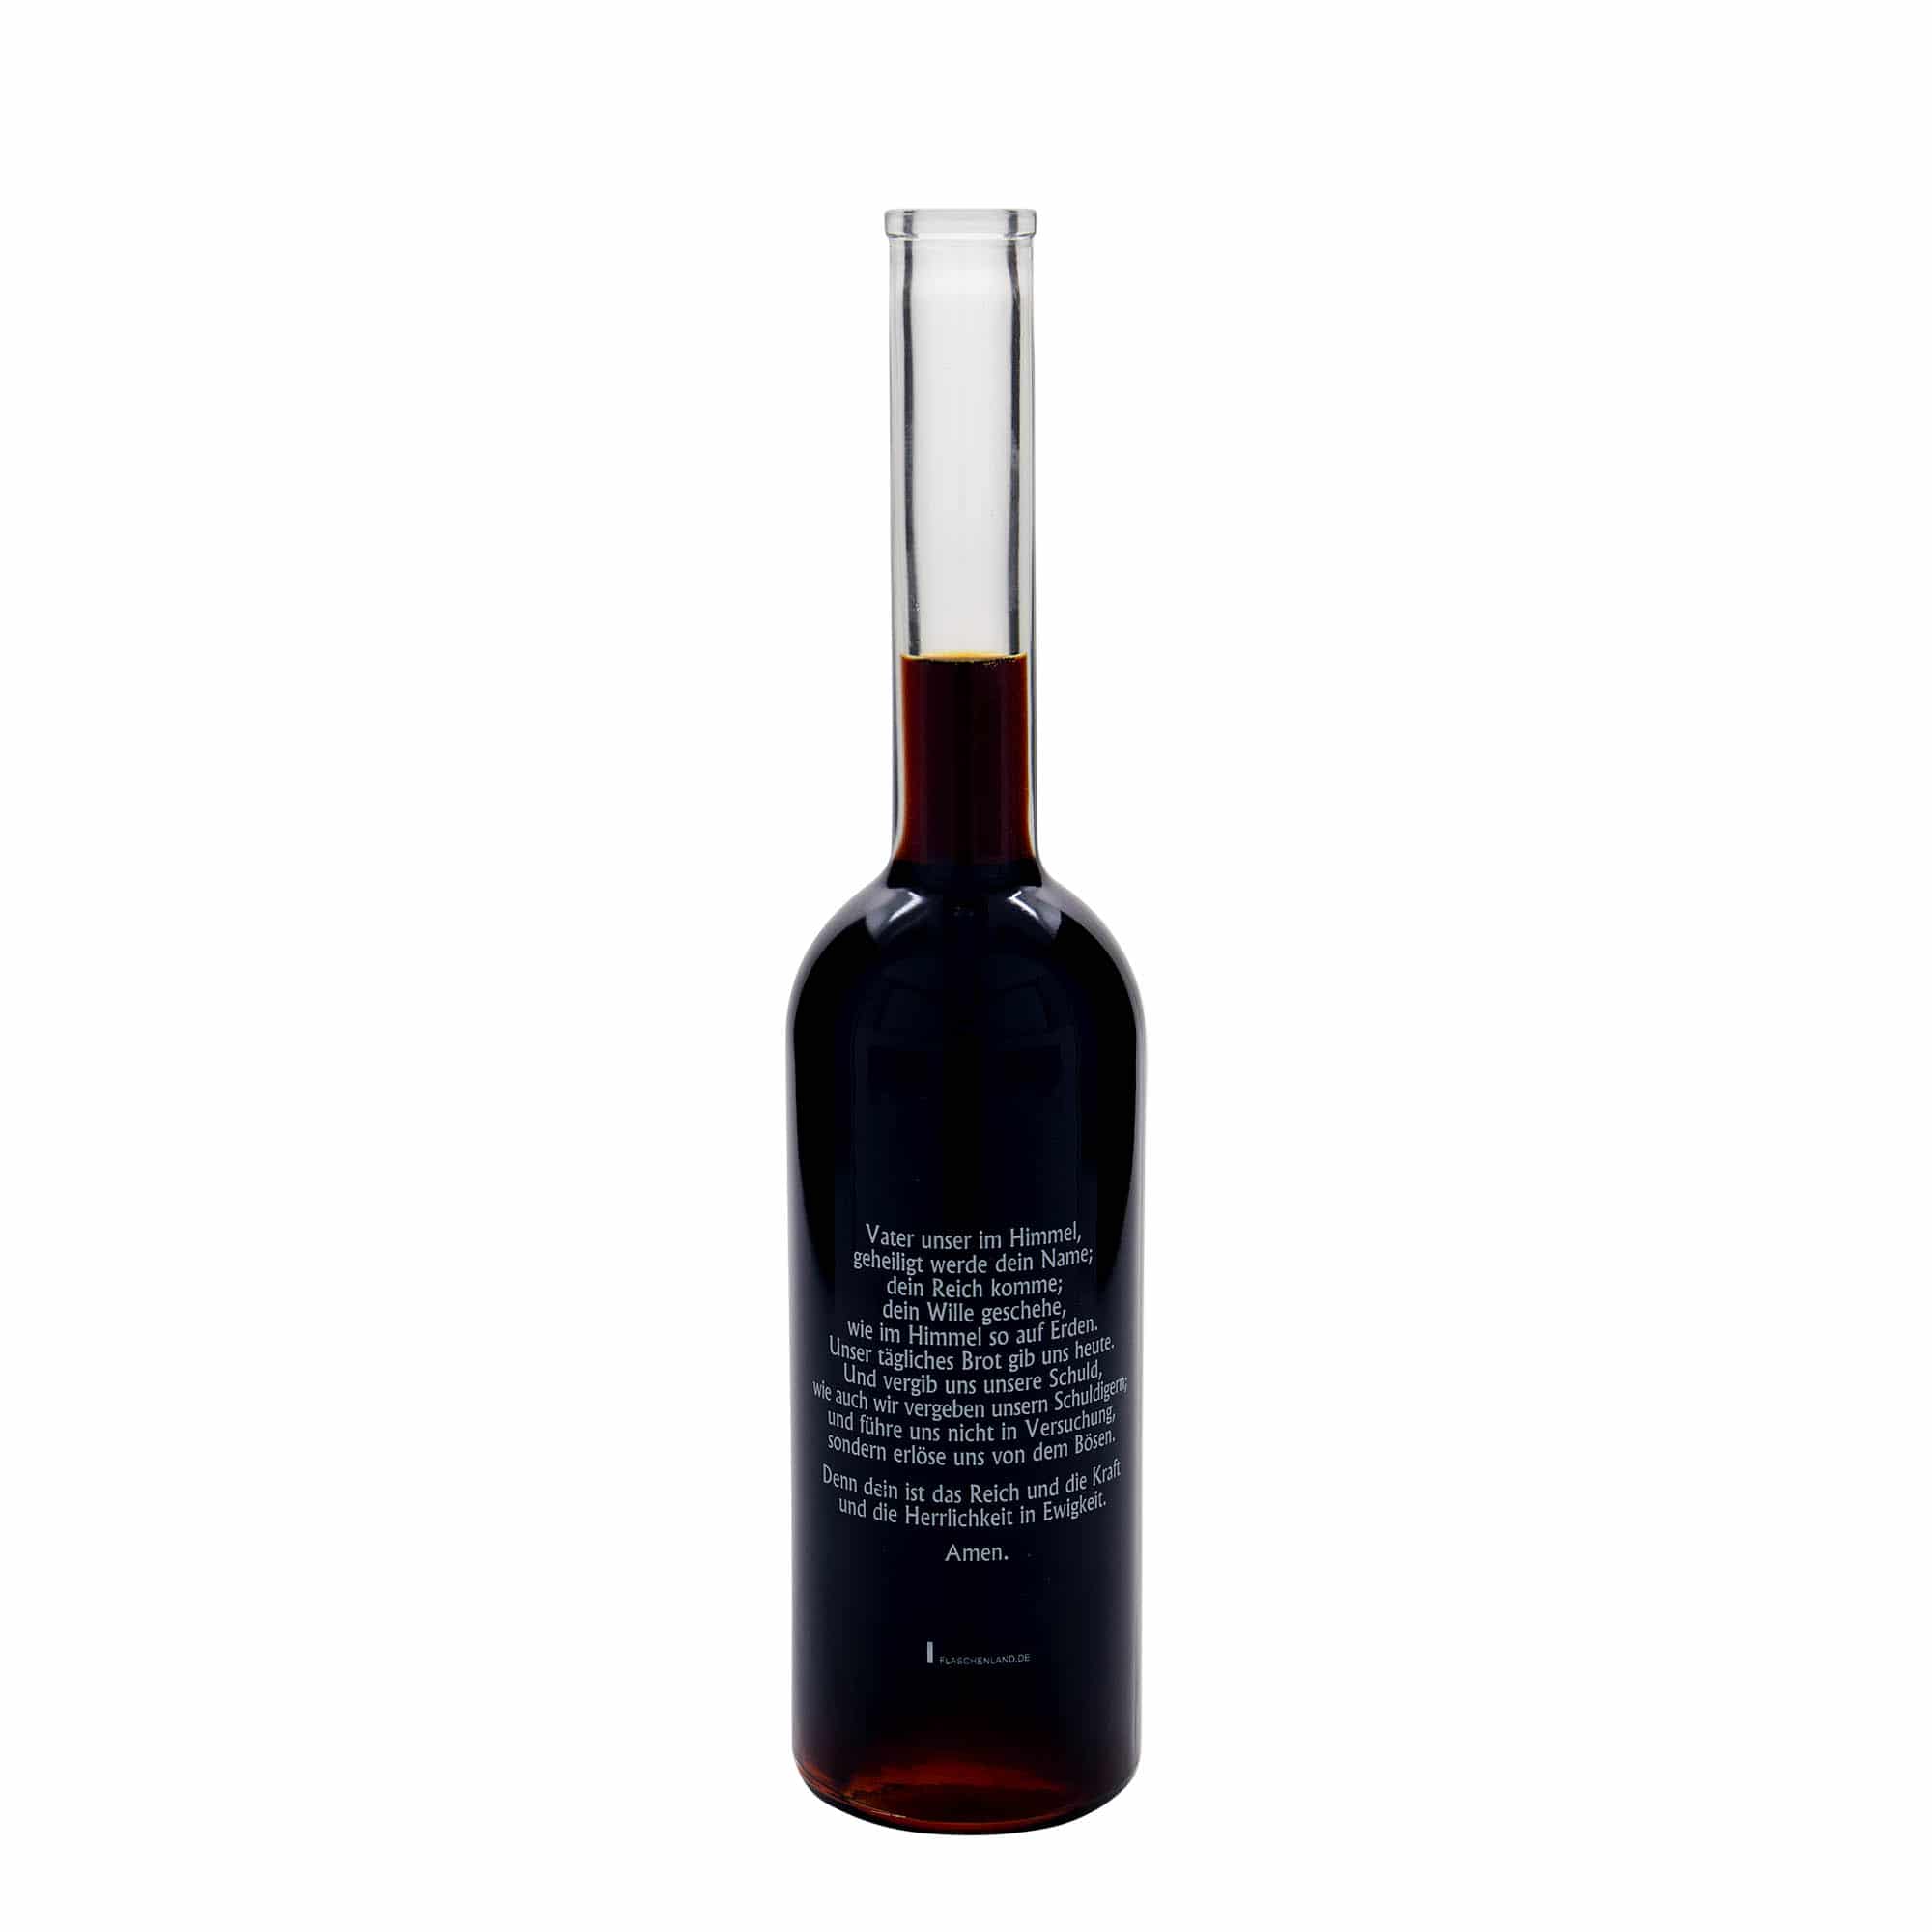 500 ml glass bottle 'Opera', print: Our Father, closure: cork